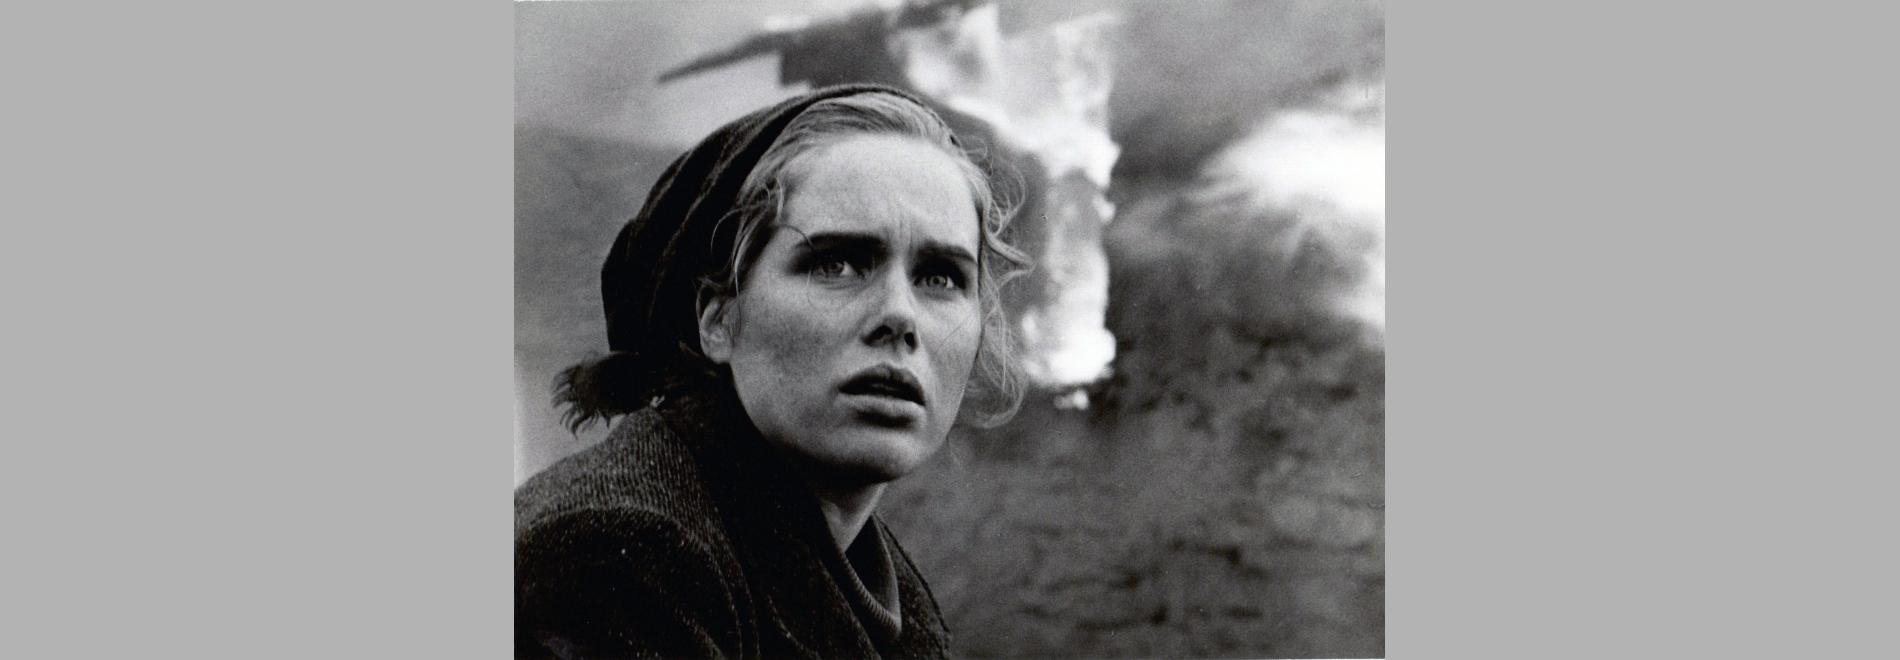 Skammen / La vergüenza (Ingmar Bergman, 1968)